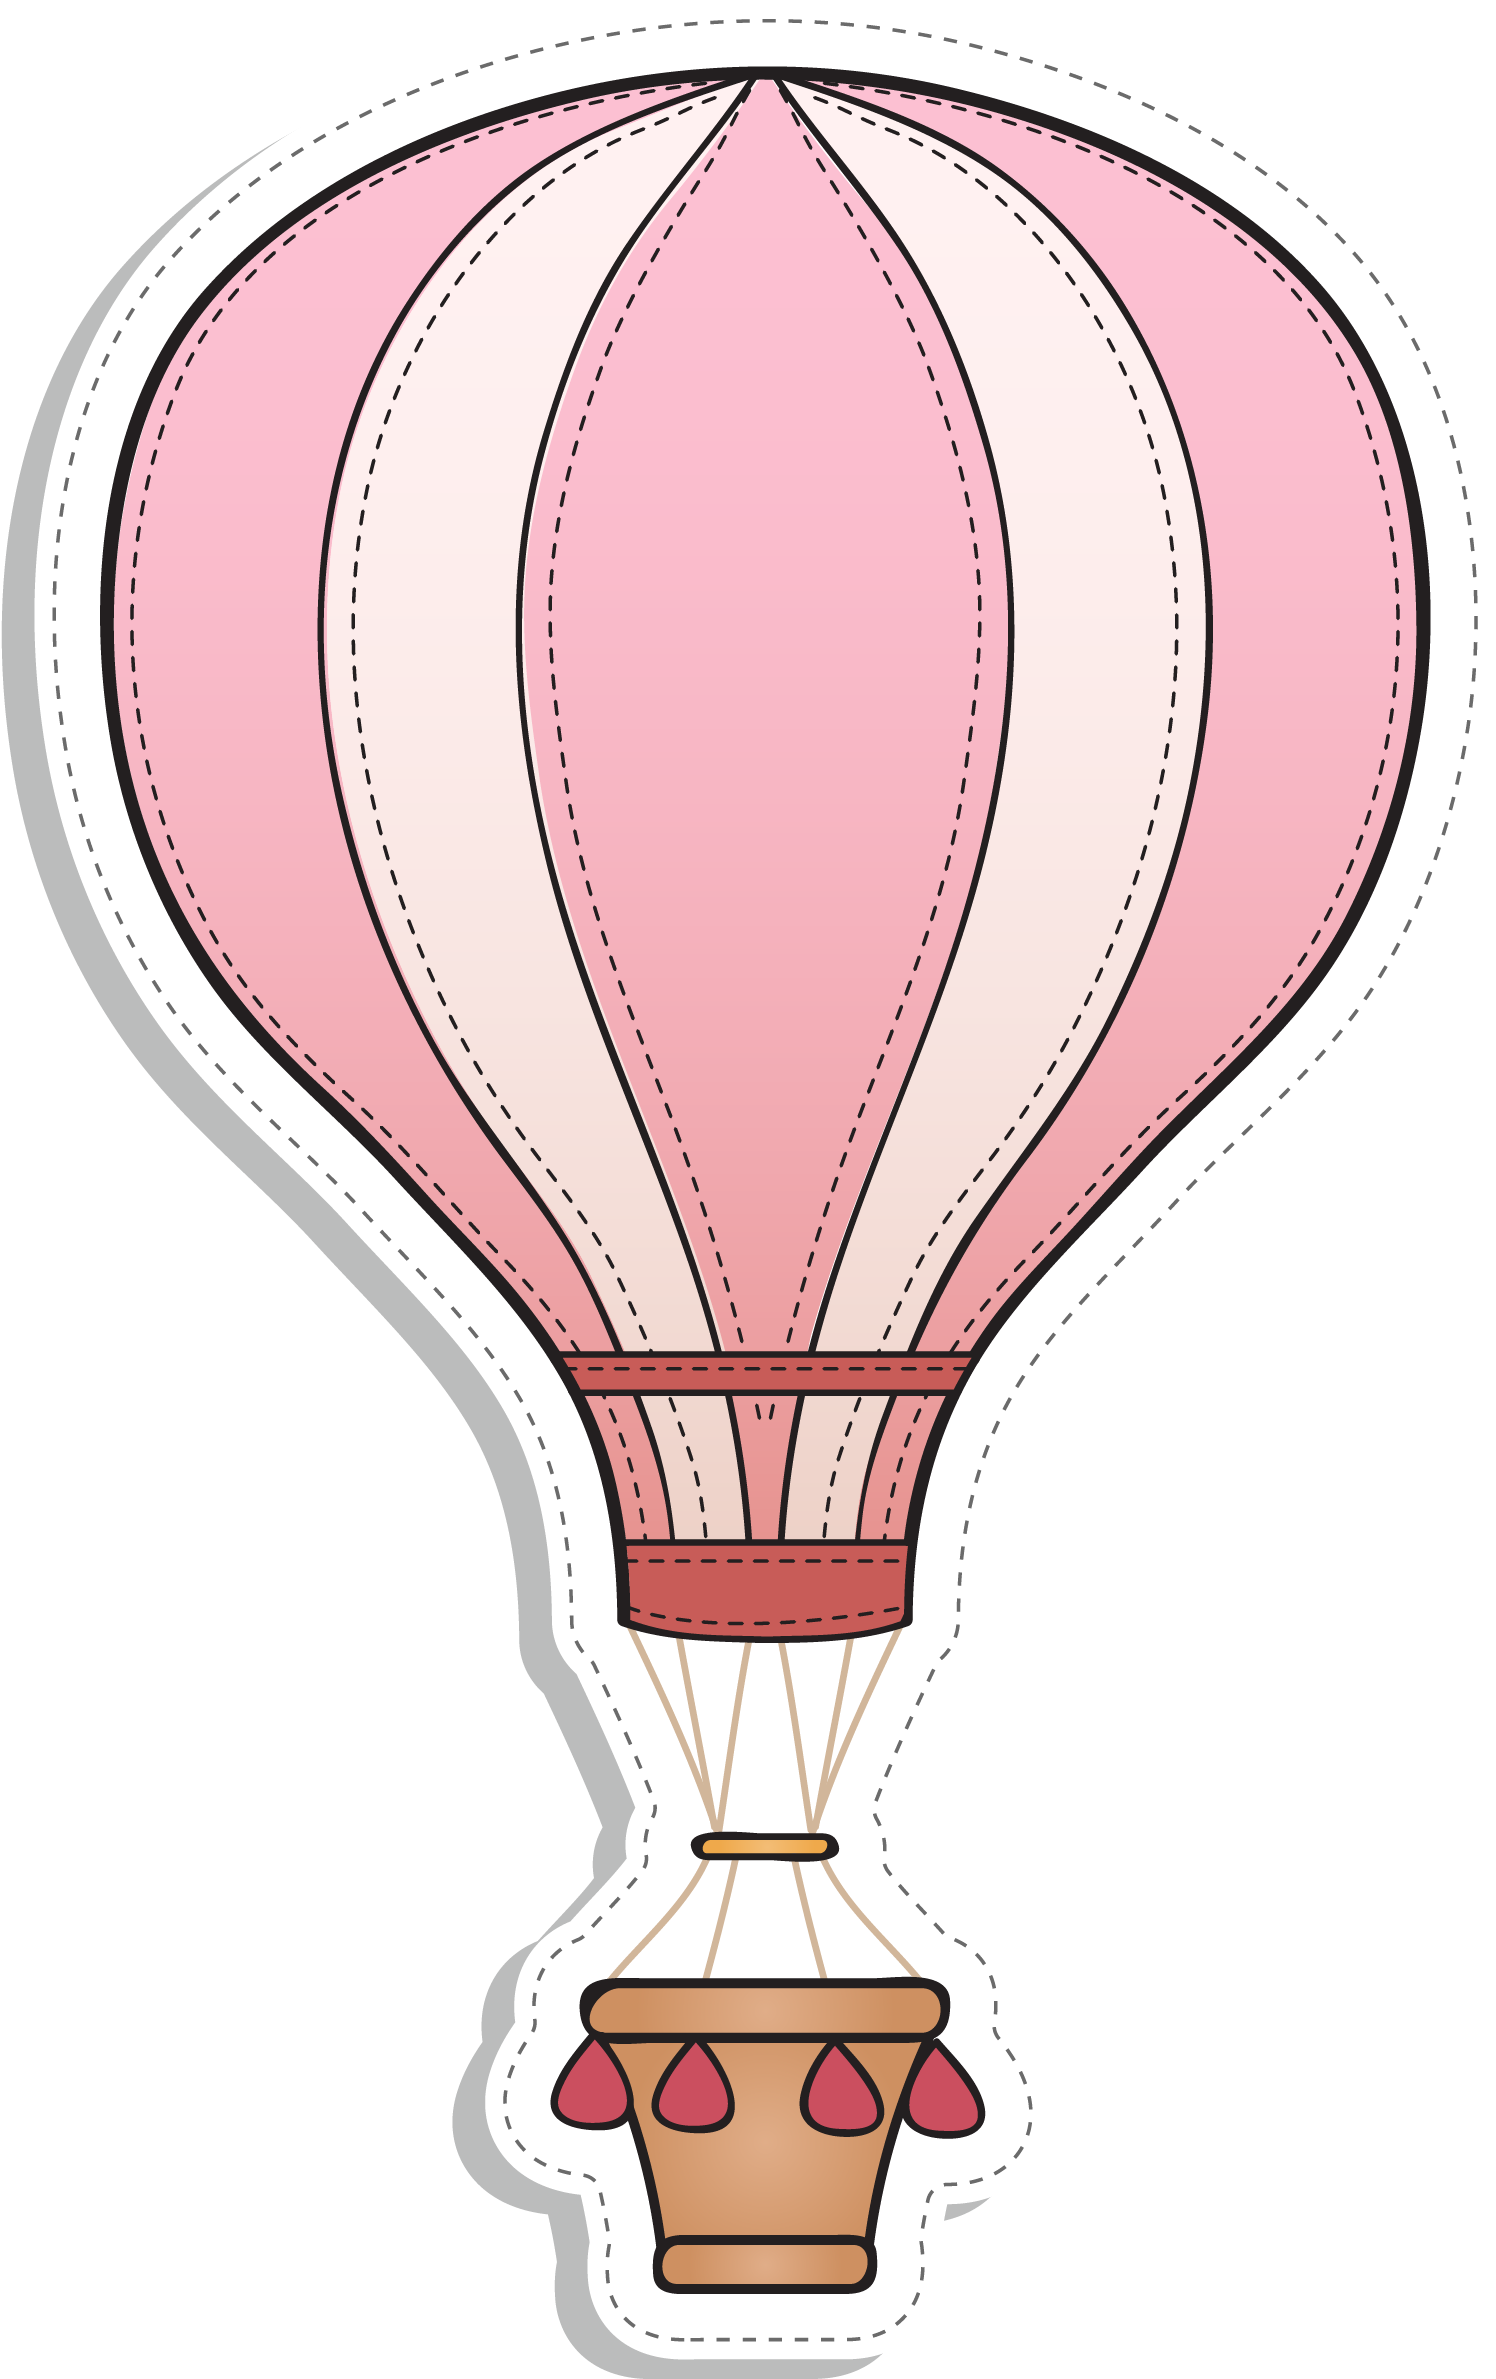 Download Hot Air Balloon - Air Balloon Cartoon Vector PNG Image with No  Background 